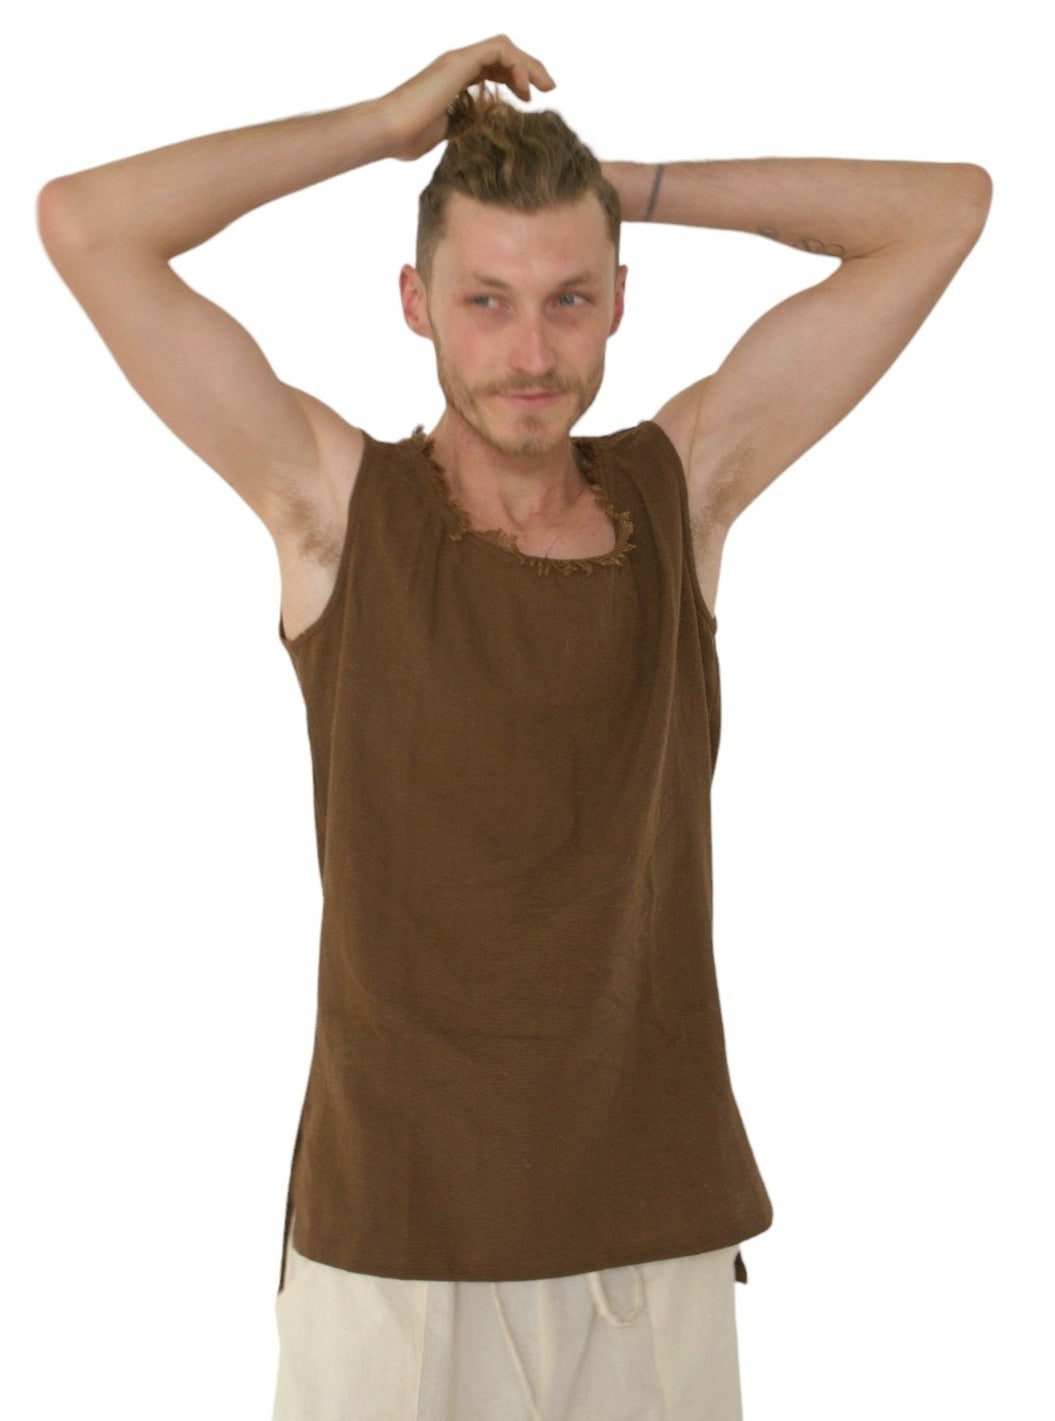 Men's Organic Cotton Sleeveless Shirt in Cacao